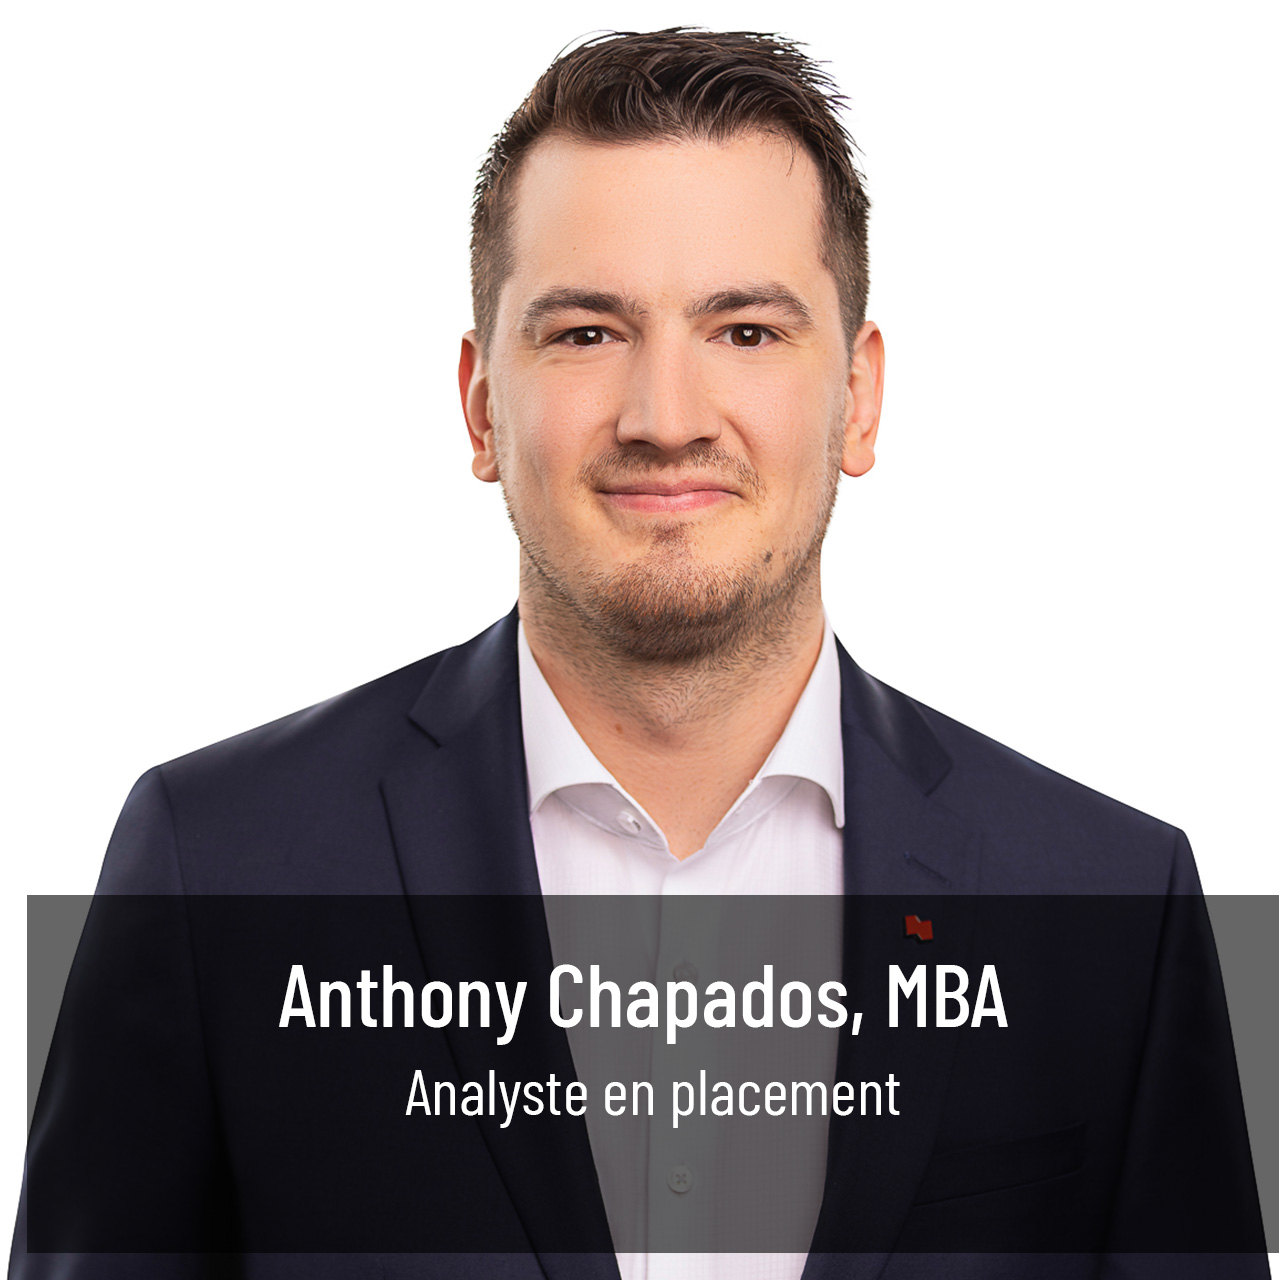 Anthony Chapados